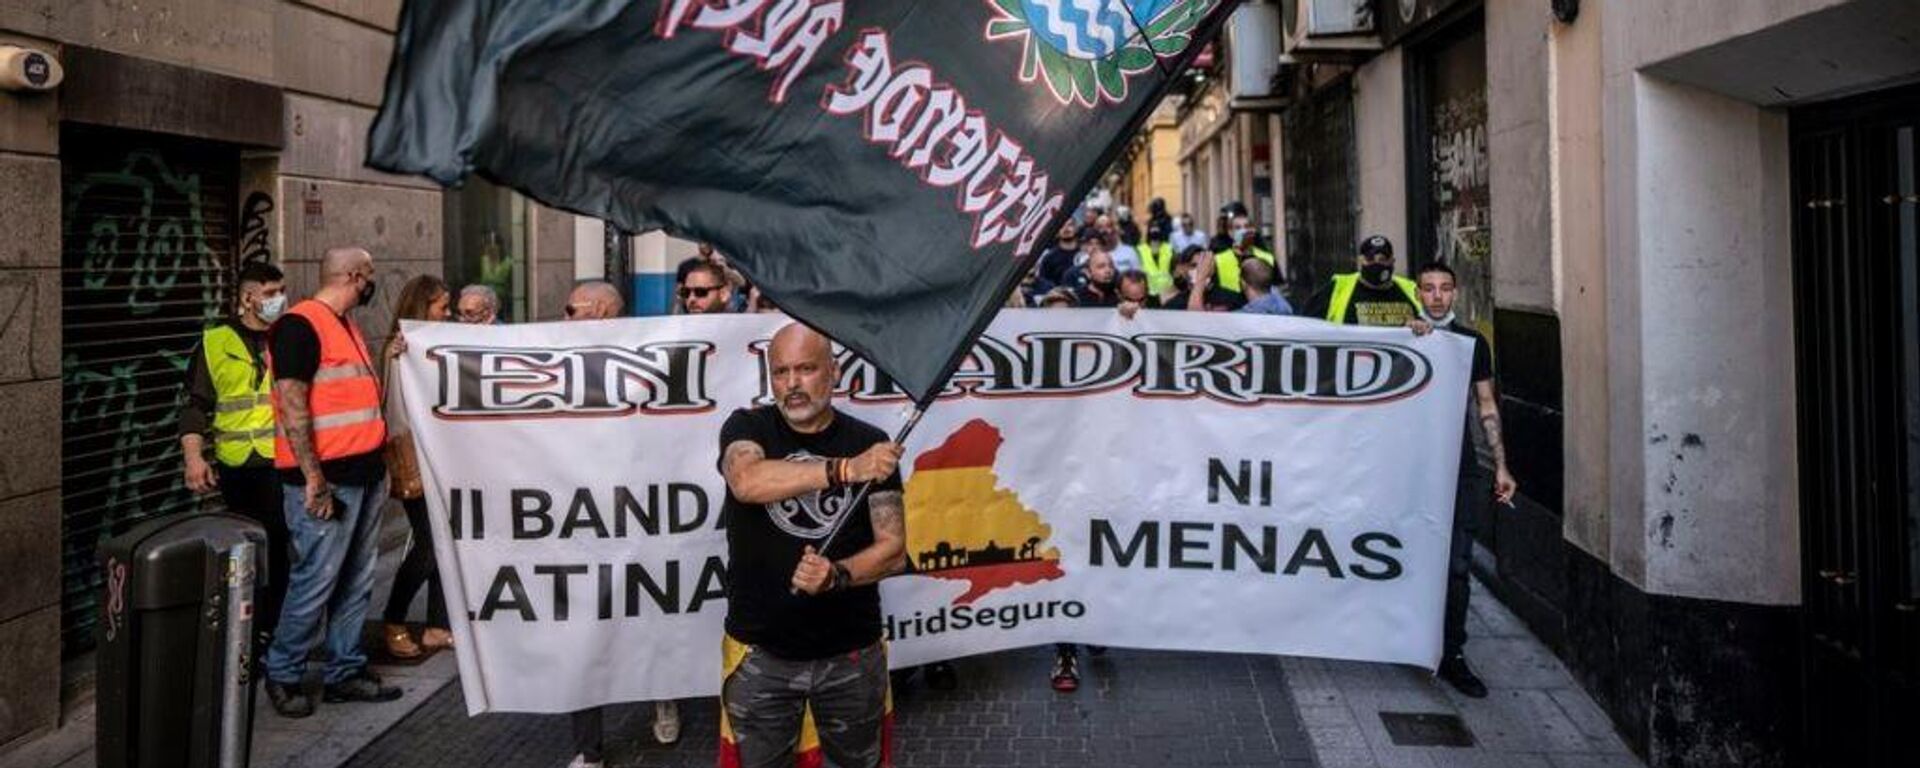 Manifestación neonazi en Chueca, Madrid - Sputnik Mundo, 1920, 20.09.2021